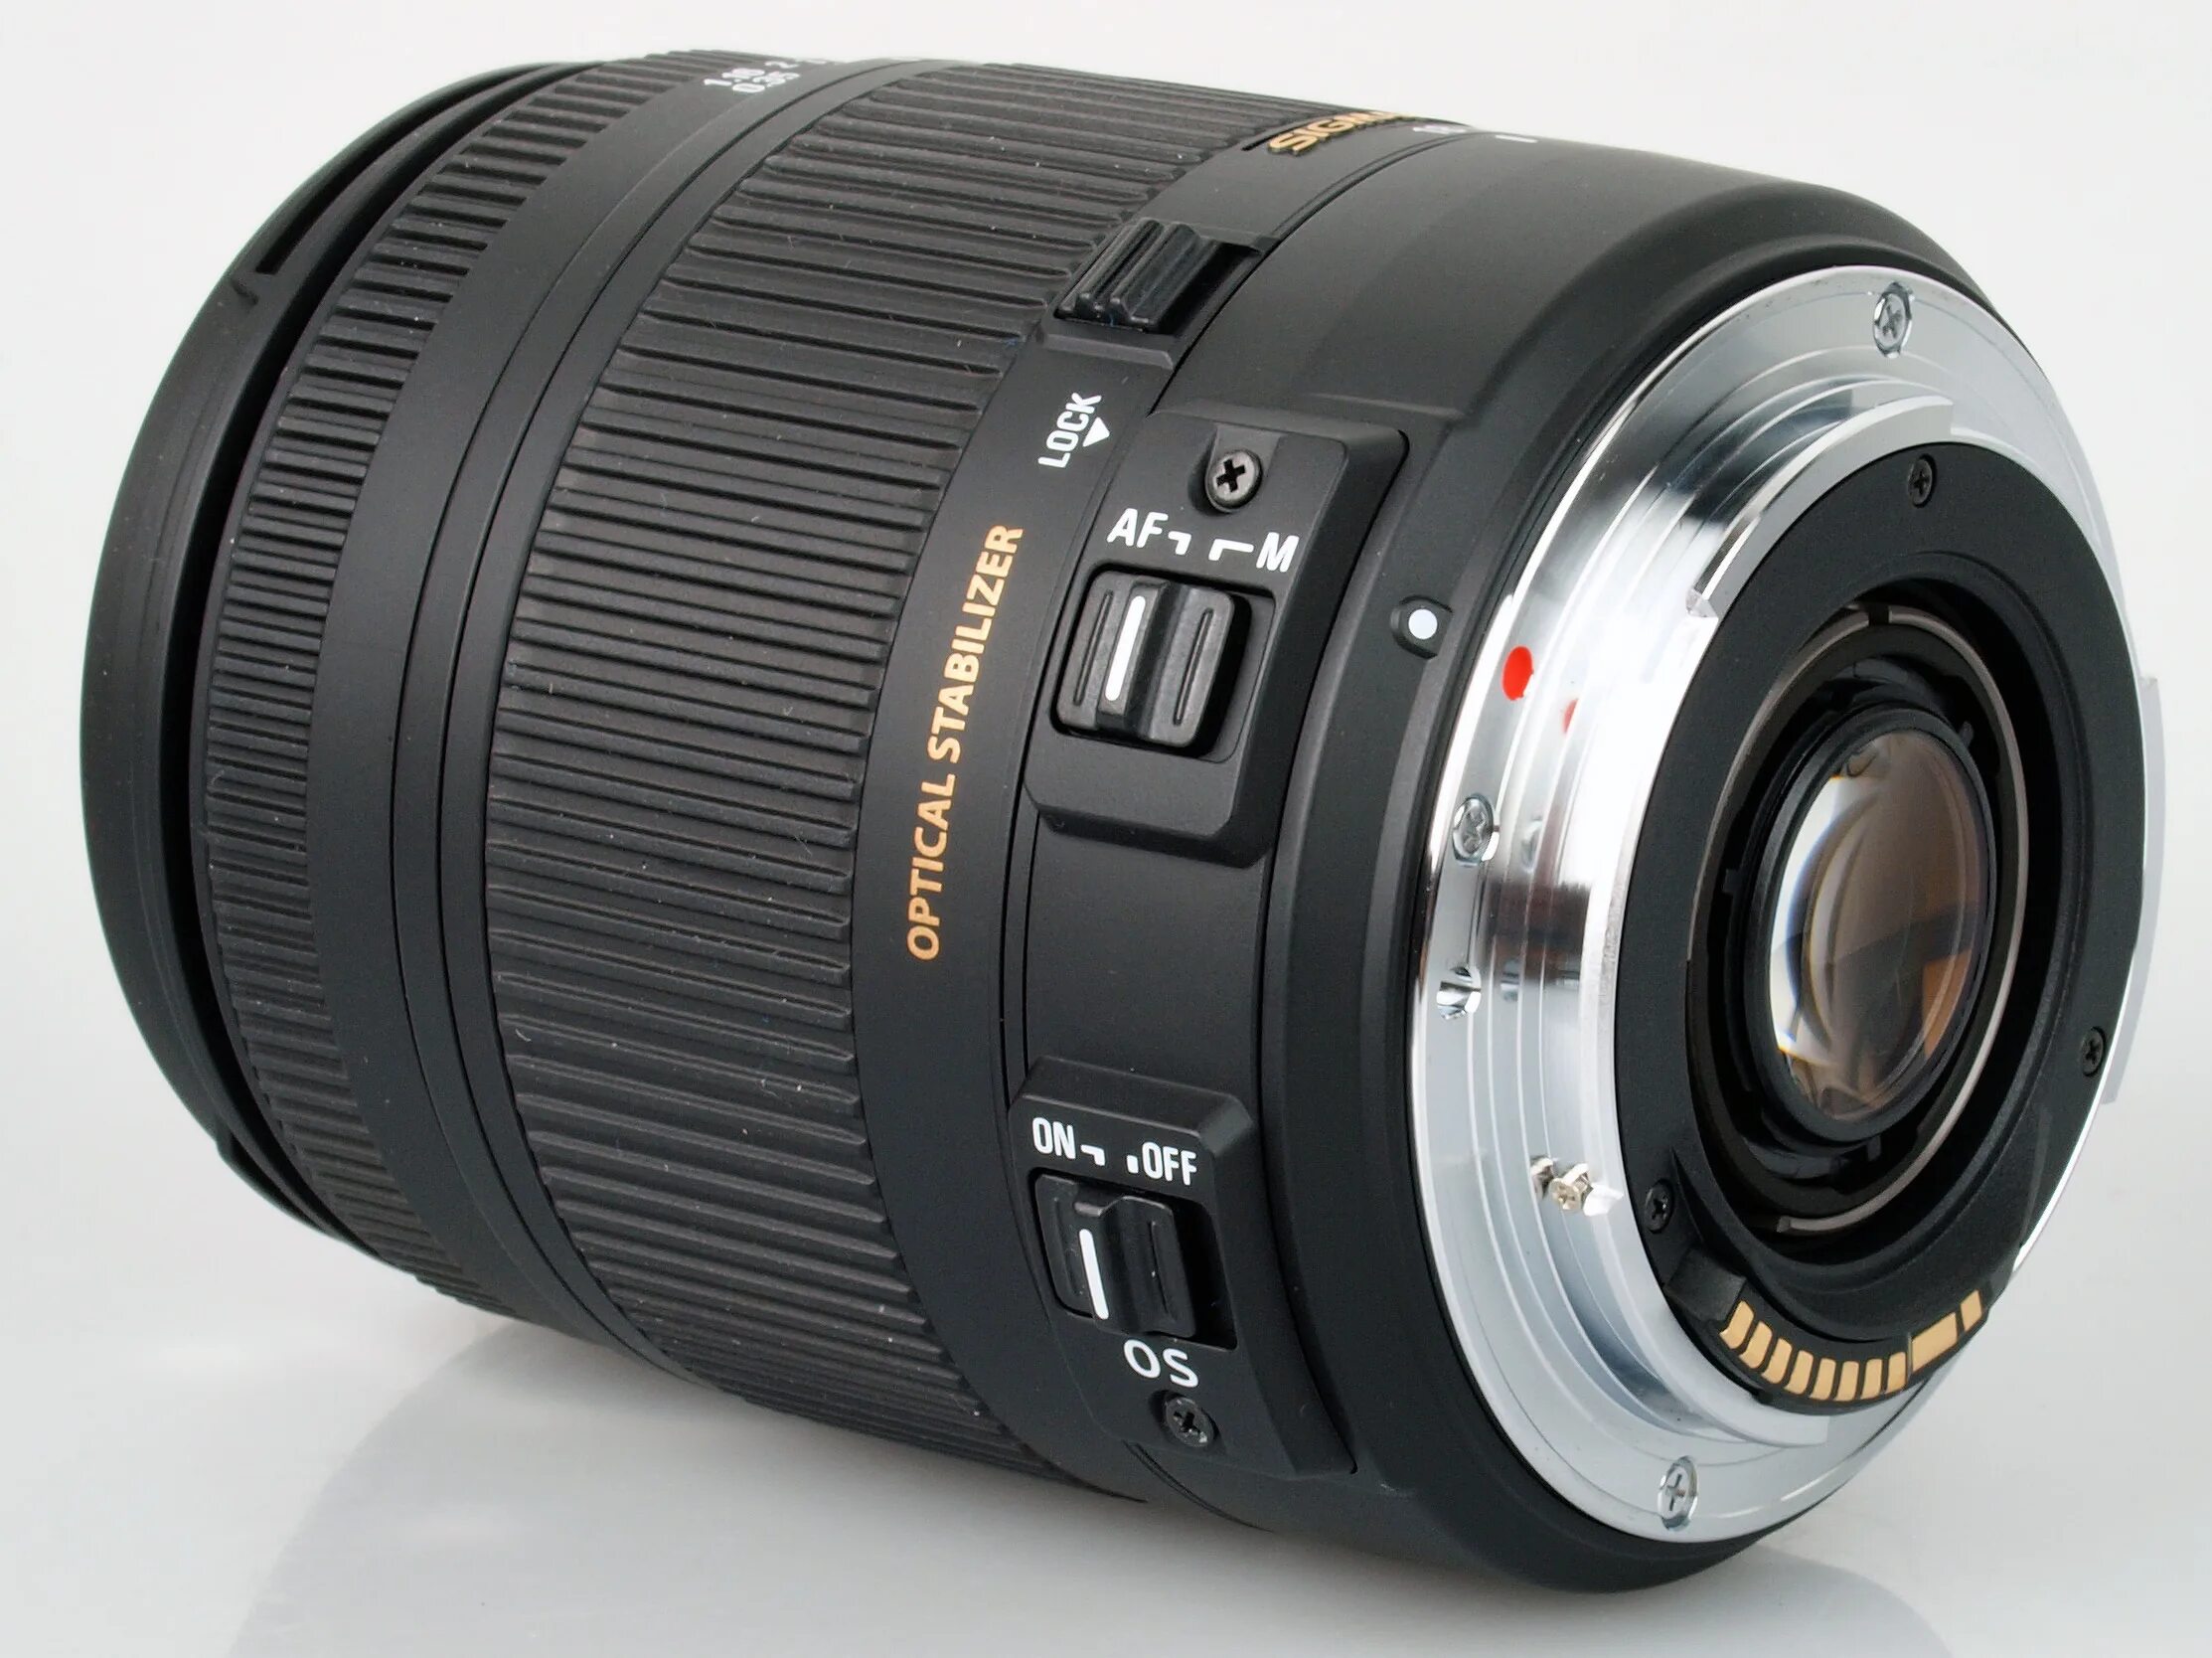 Sigma af 18-250mm f/3.5-6.3 DC os HSM macro Nikon f. Sigma af 18-250mm f/3.5-6.3 DC os HSM. Sigma 18-250 mm. Sigma af 18-250mm.